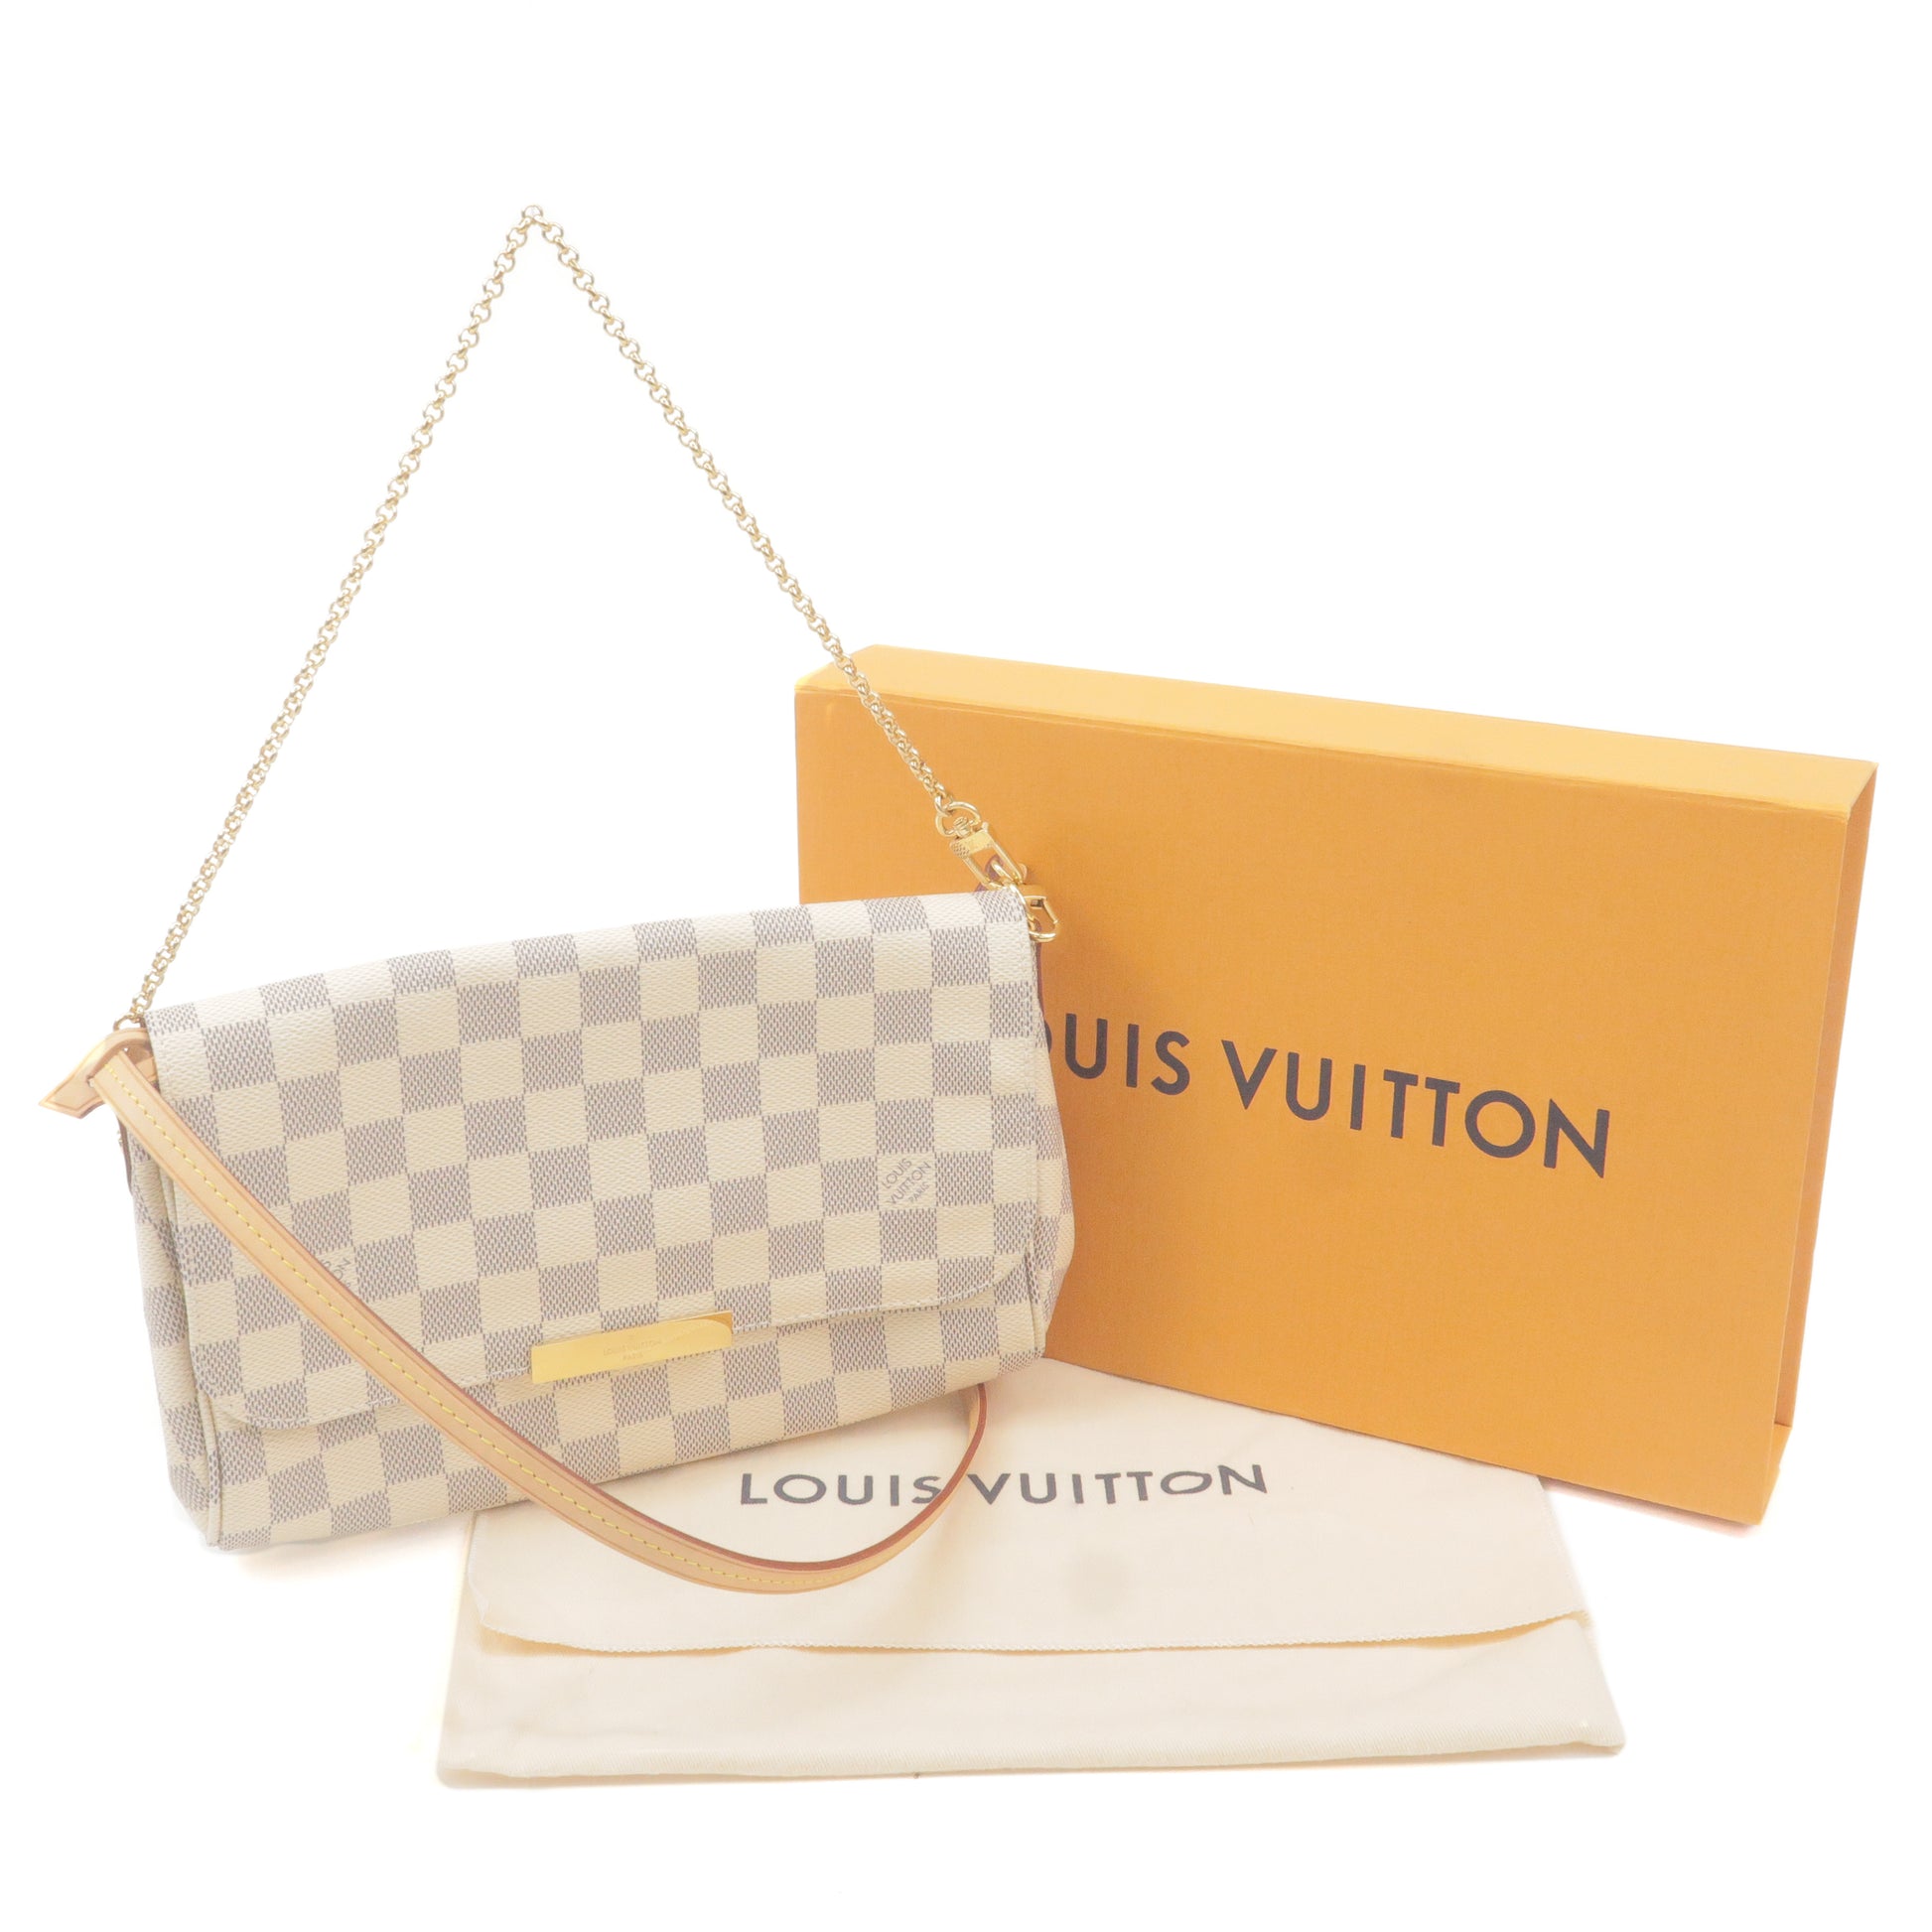 Selena's Louis Vuitton City Steamer Bag